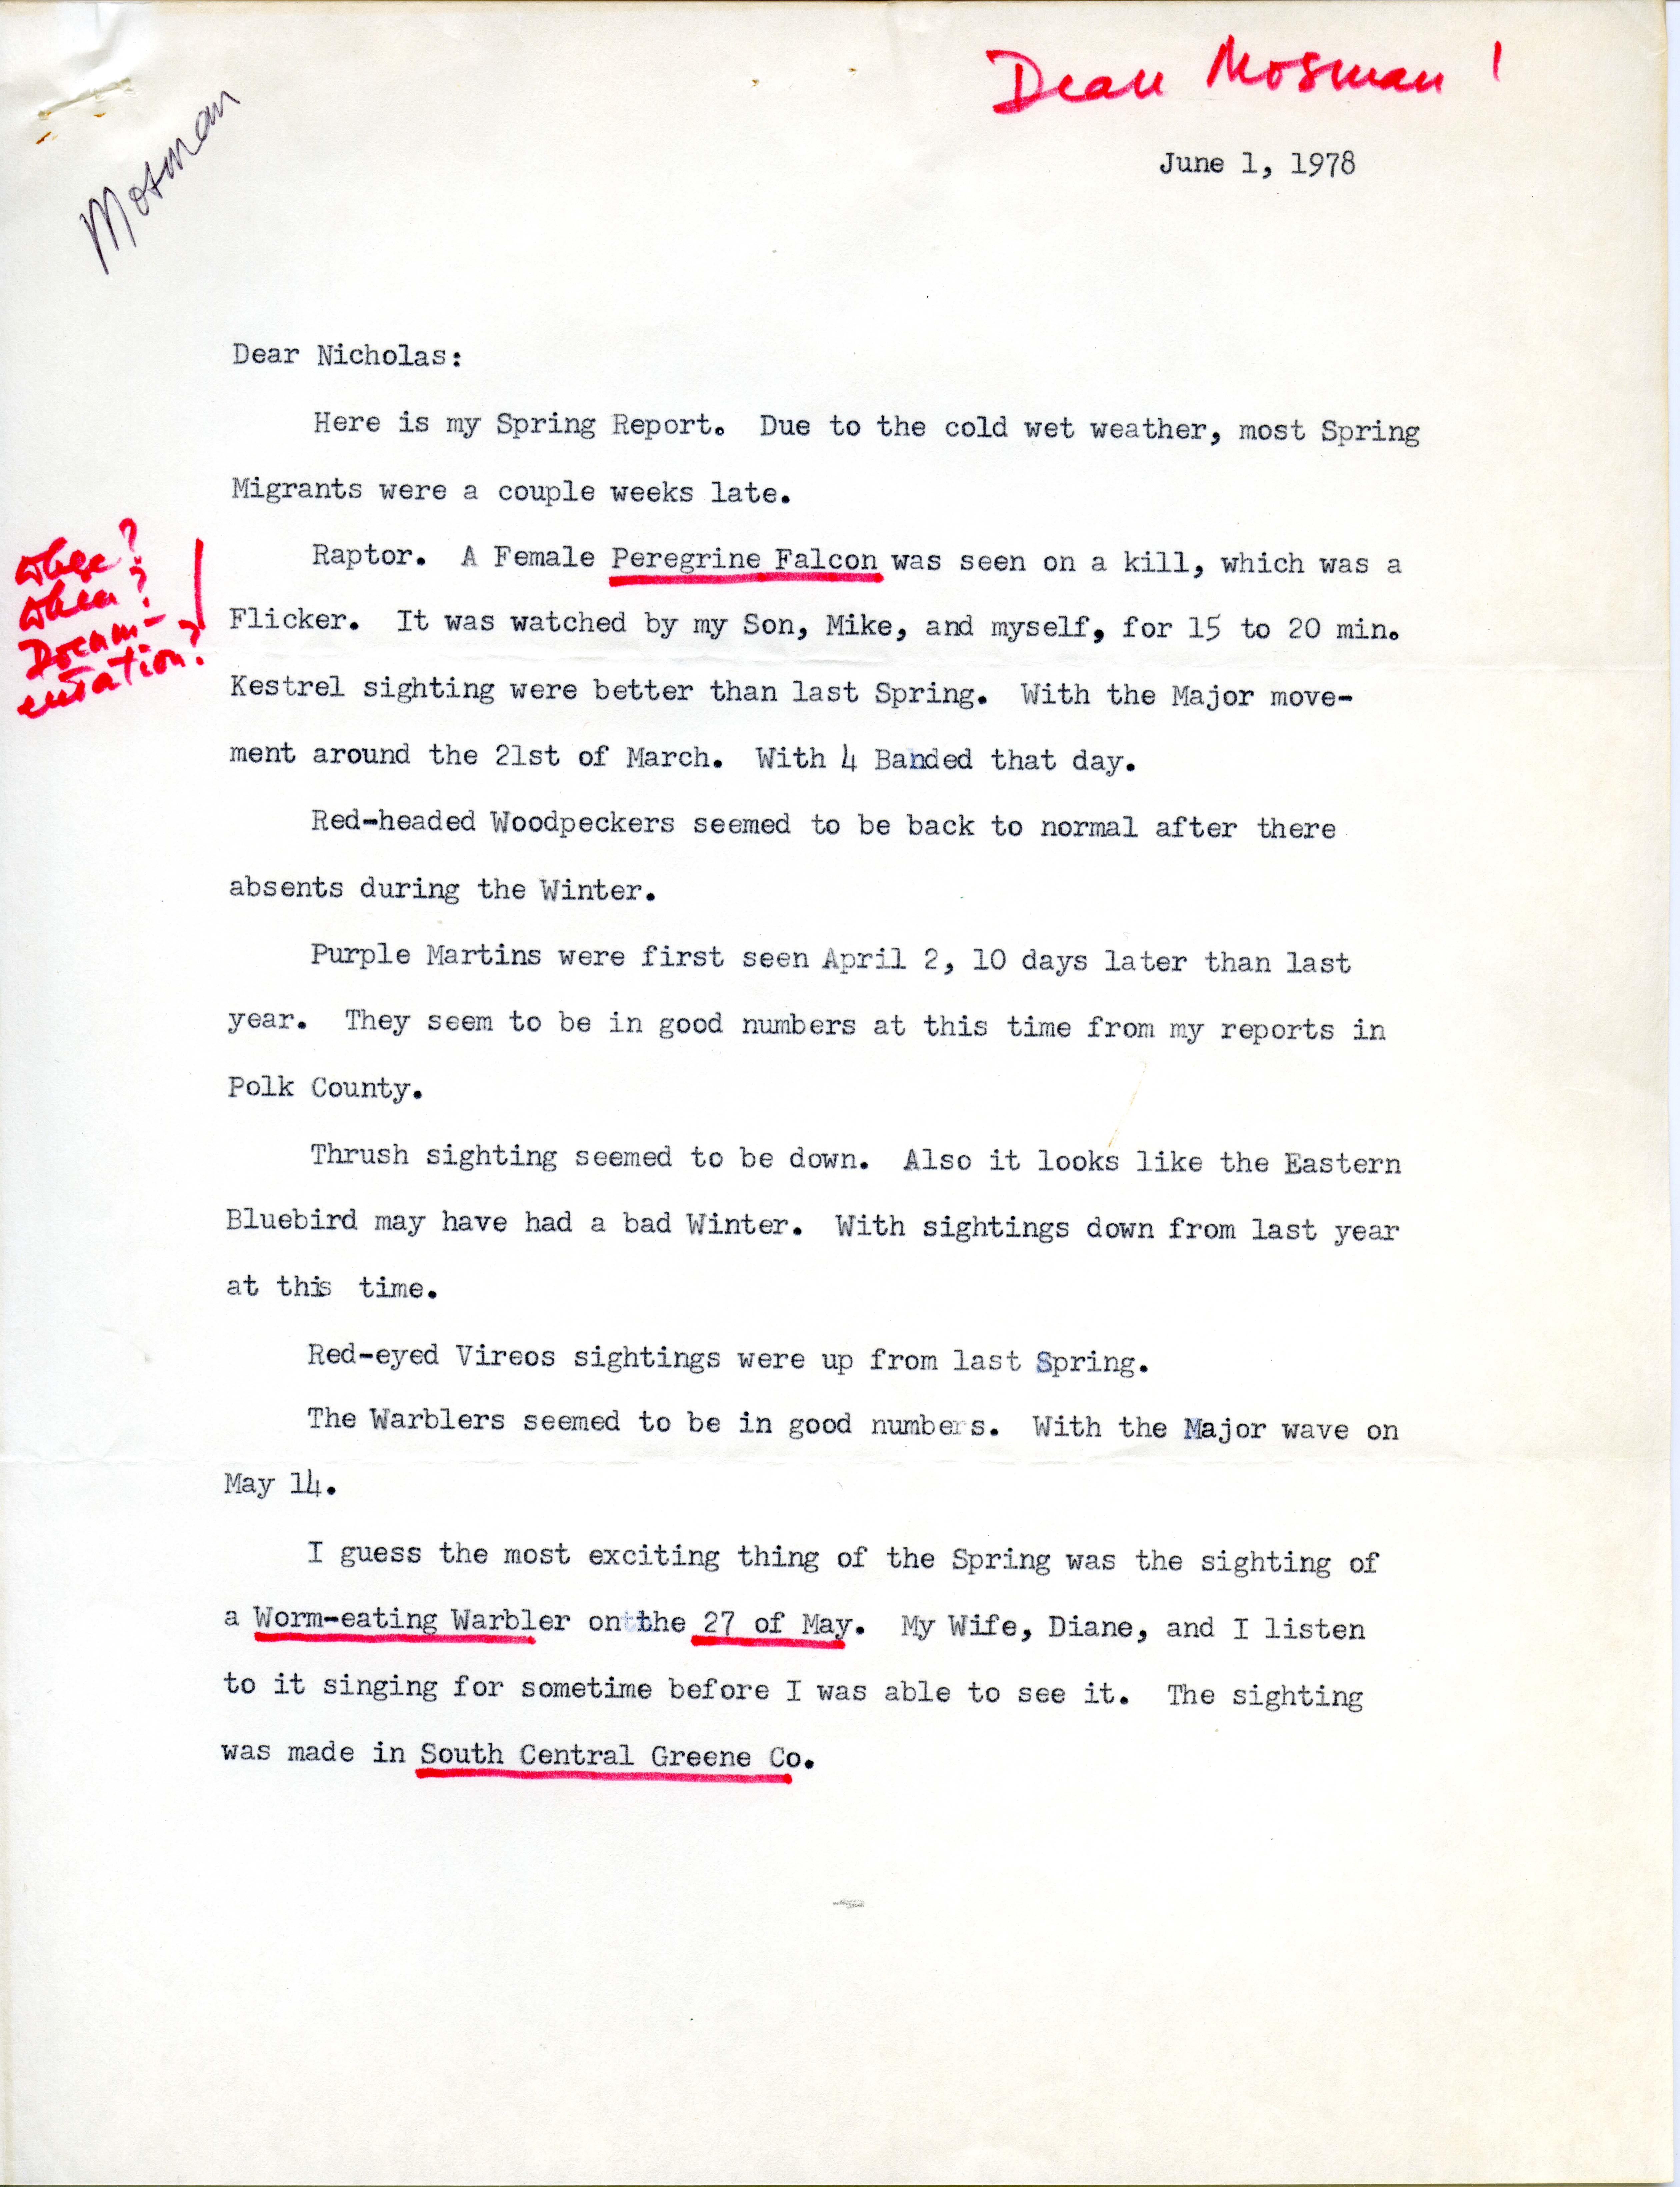 Dean Mosman letter to Nicholas S. Halmi regarding bird sightings, June 1, 1978